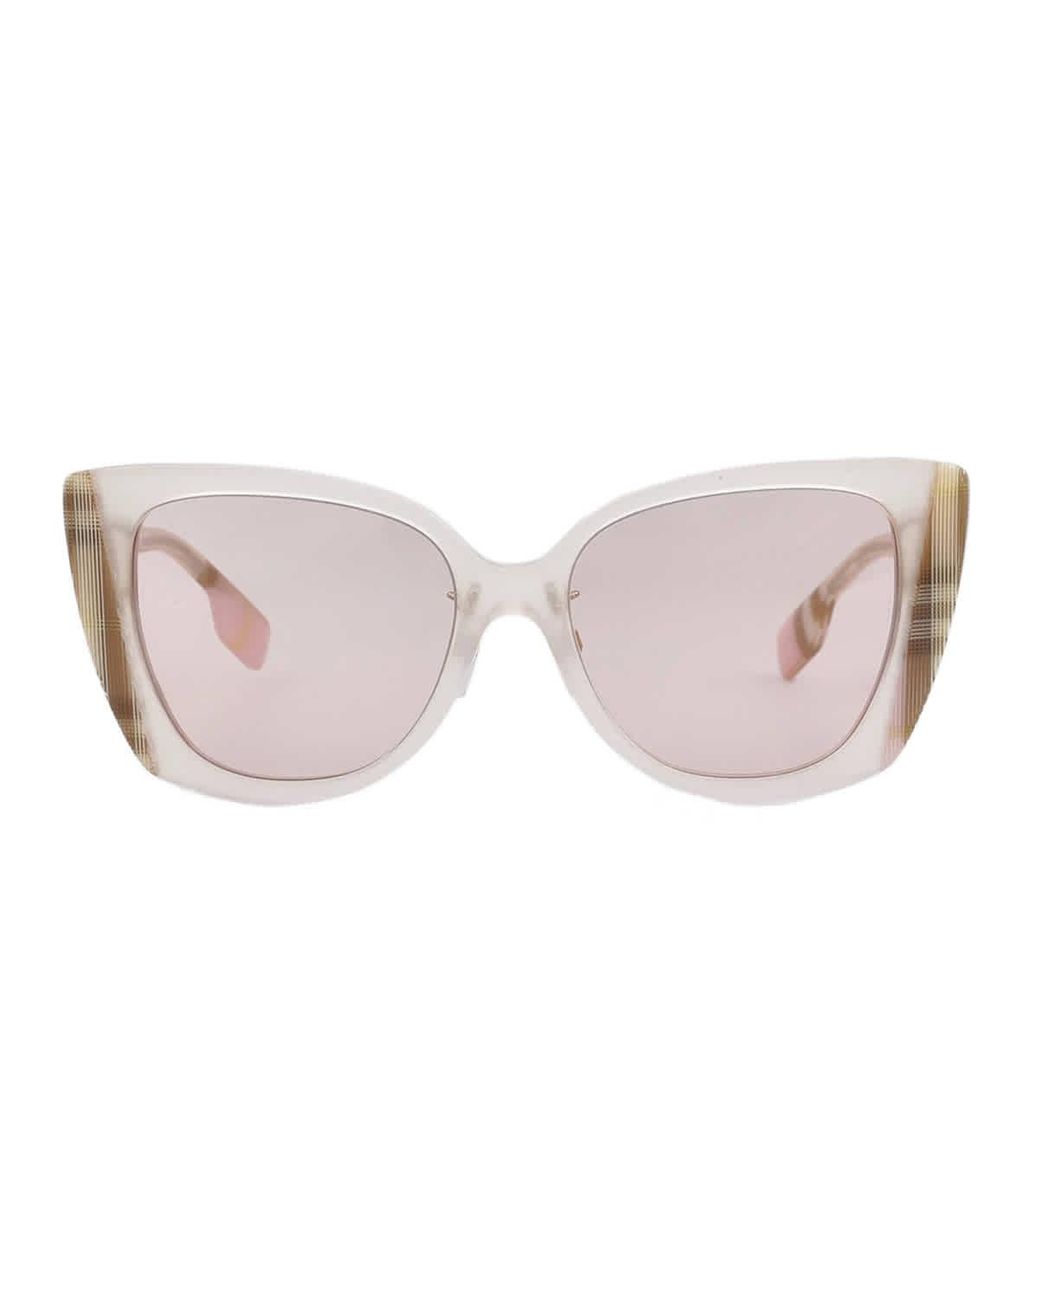 Burberry Meryl Light Cat 54 4052/5 Lyst in Pink UK Eye Be4393f Sunglasses 